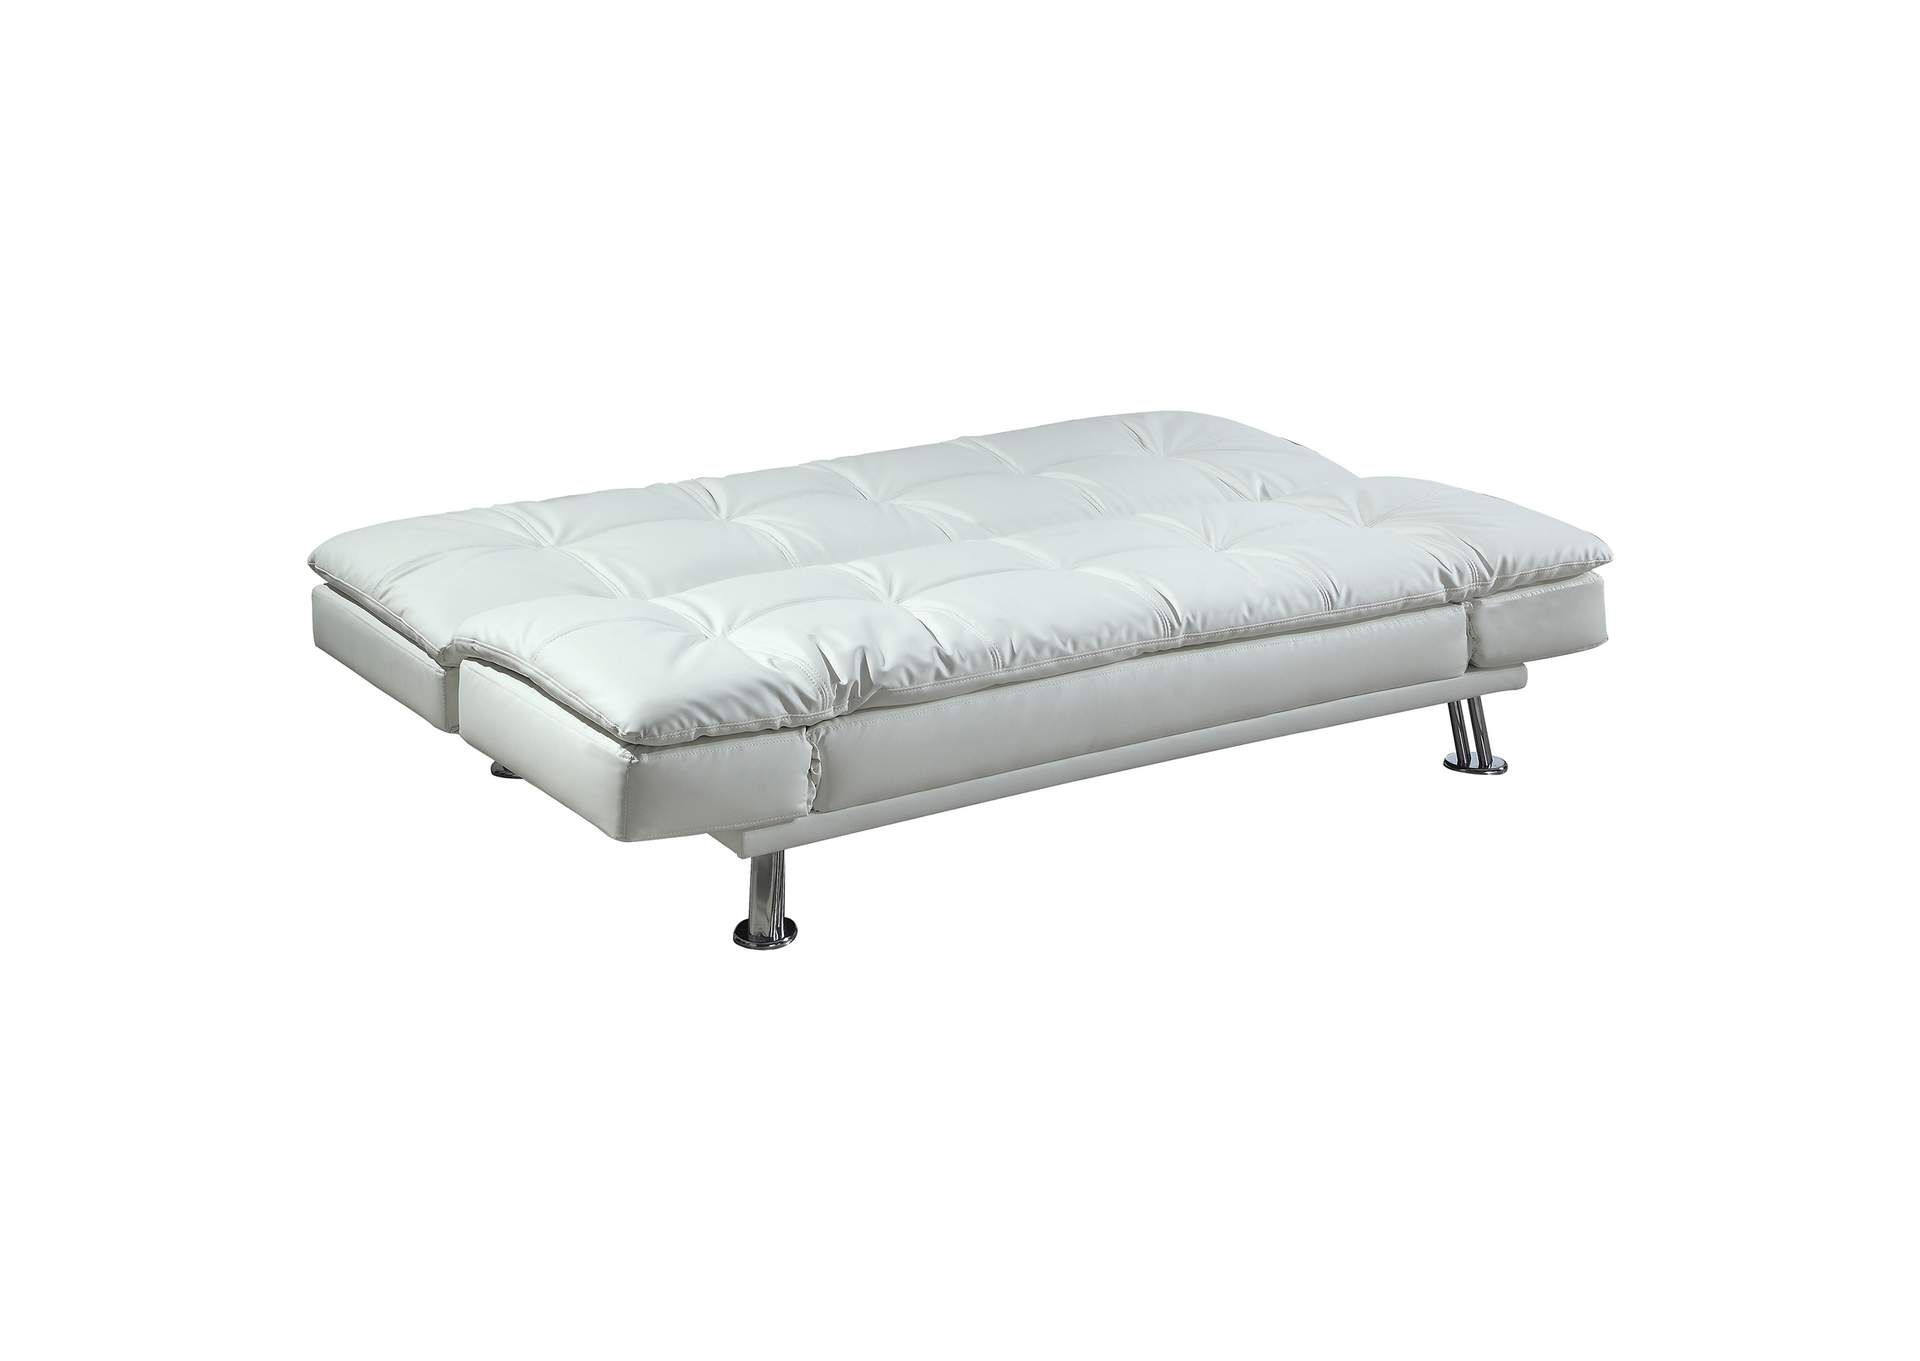 Dilleston Tufted Back Upholstered Sofa Bed White,Coaster Furniture